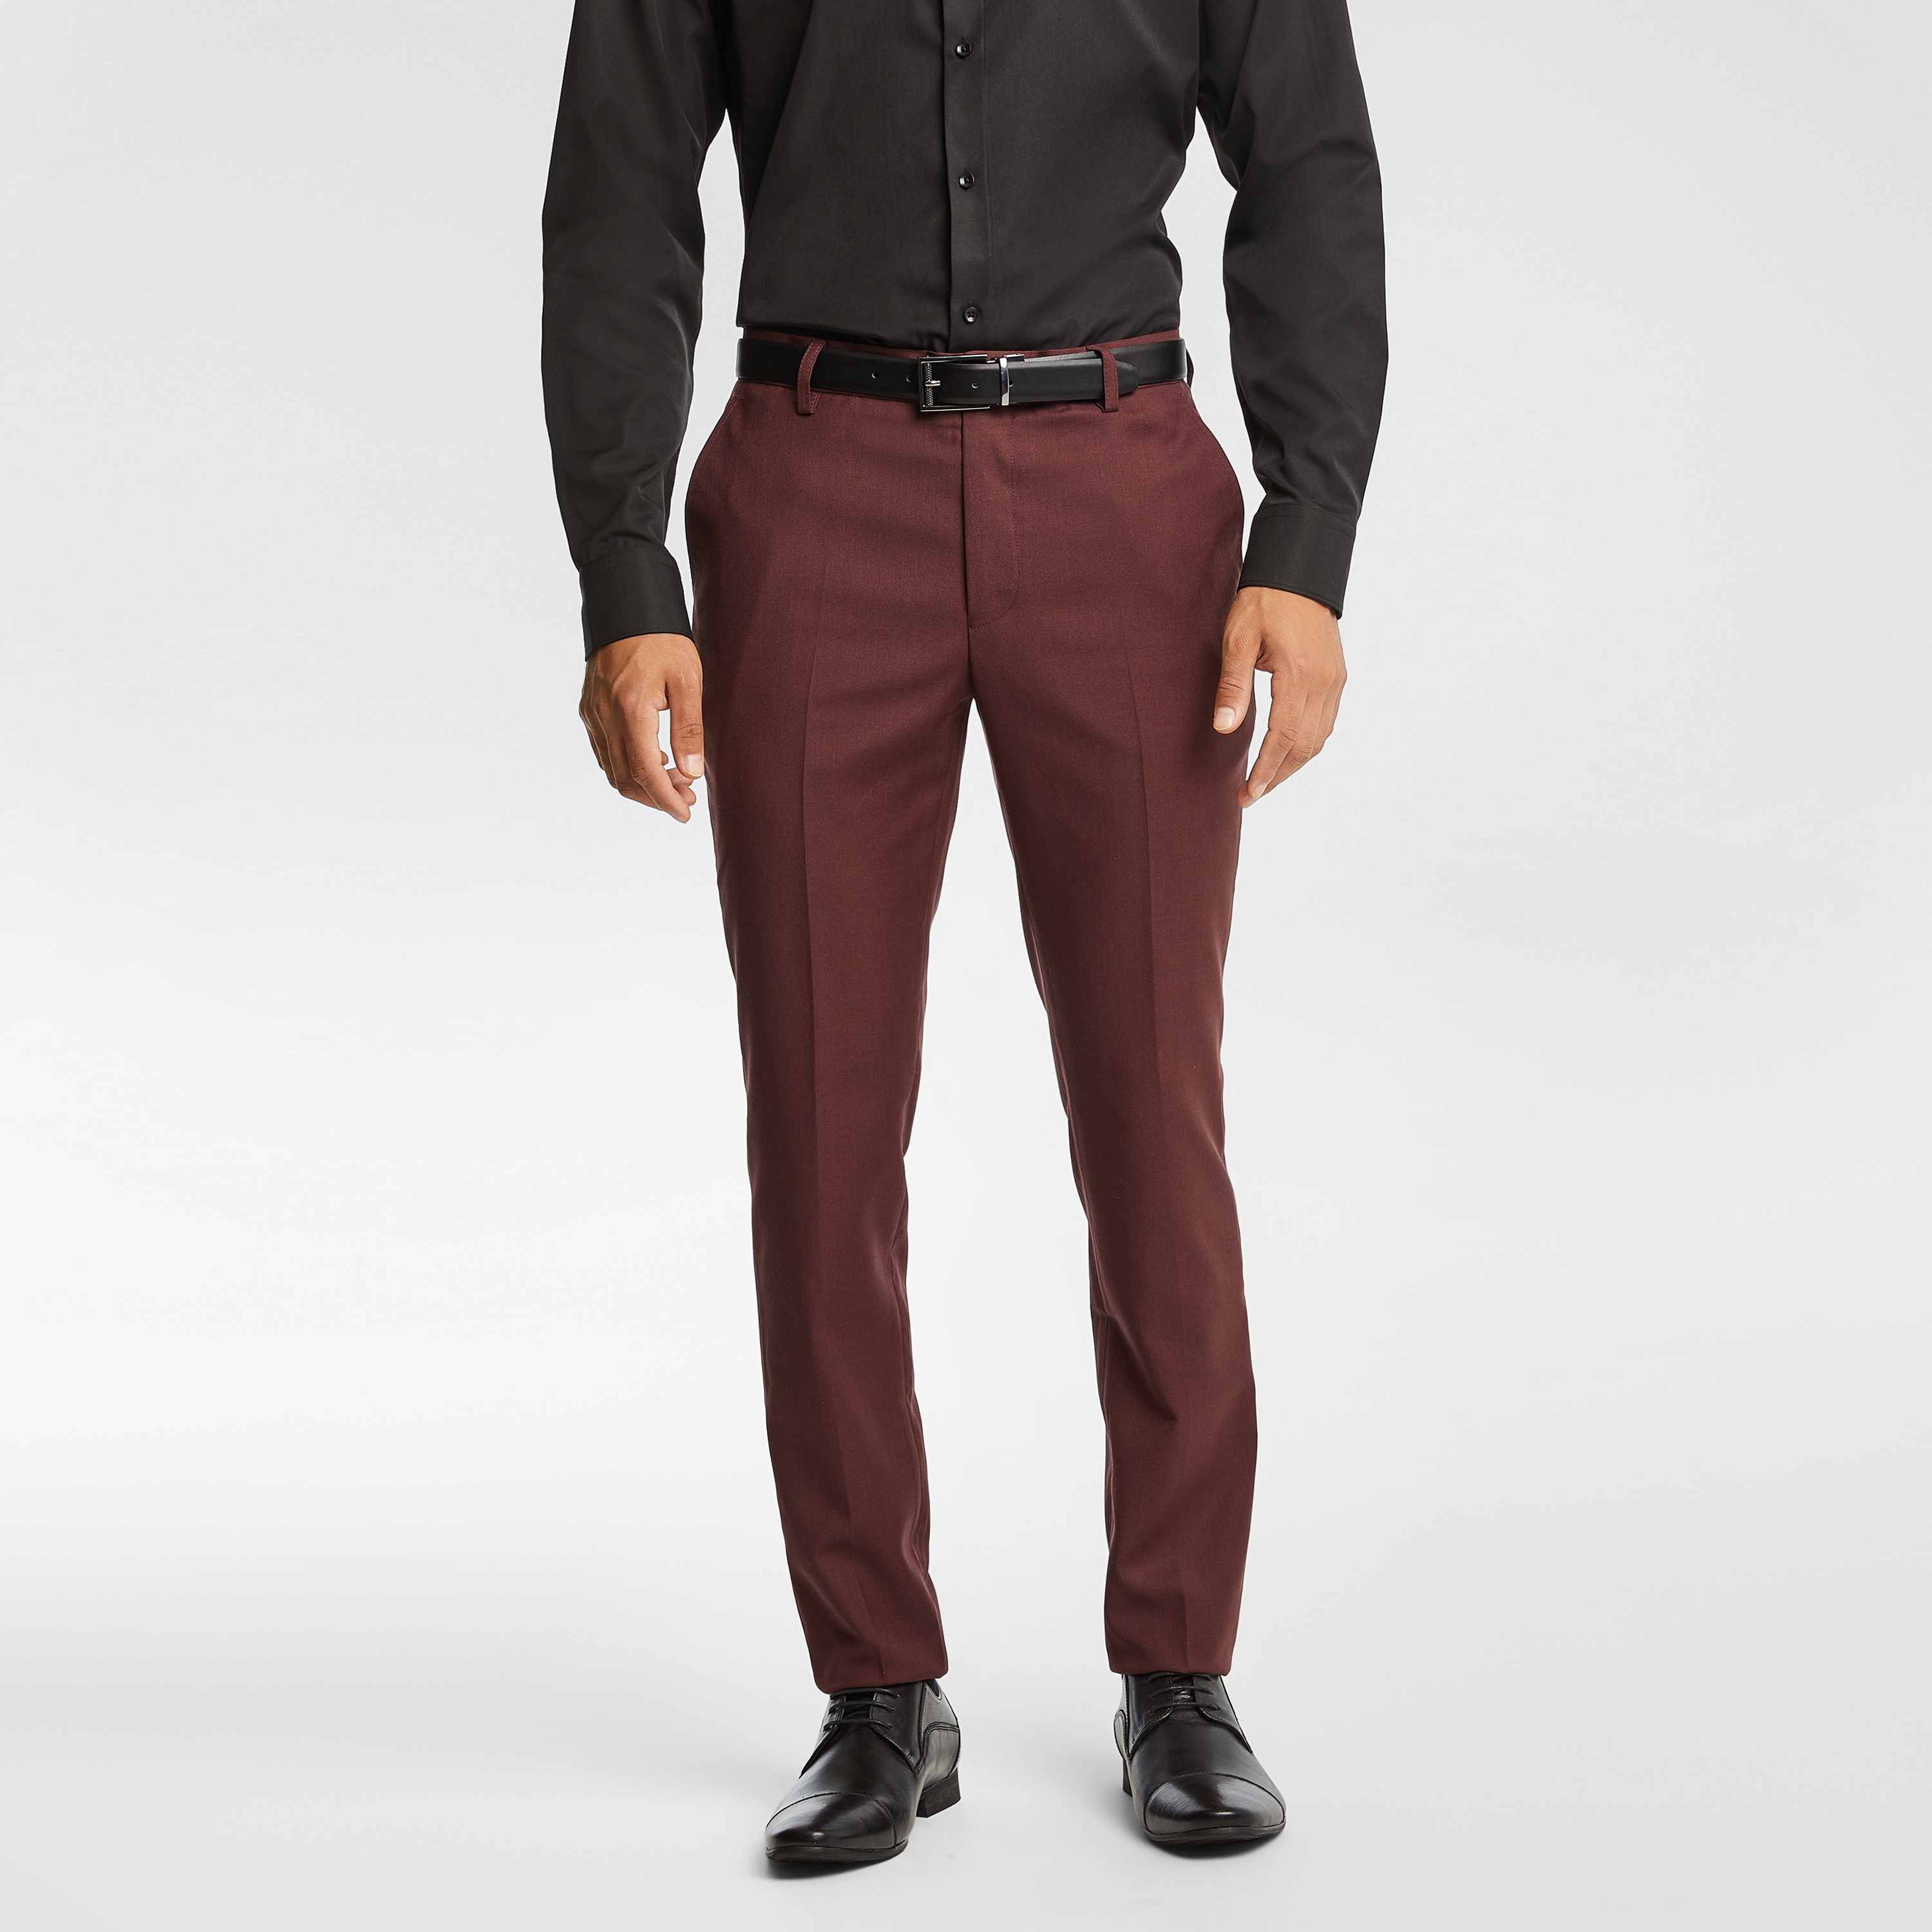 OTTO - Maroon Plain Formal Shirt. Relax Fit - BIPASA_14 – ottostore.com